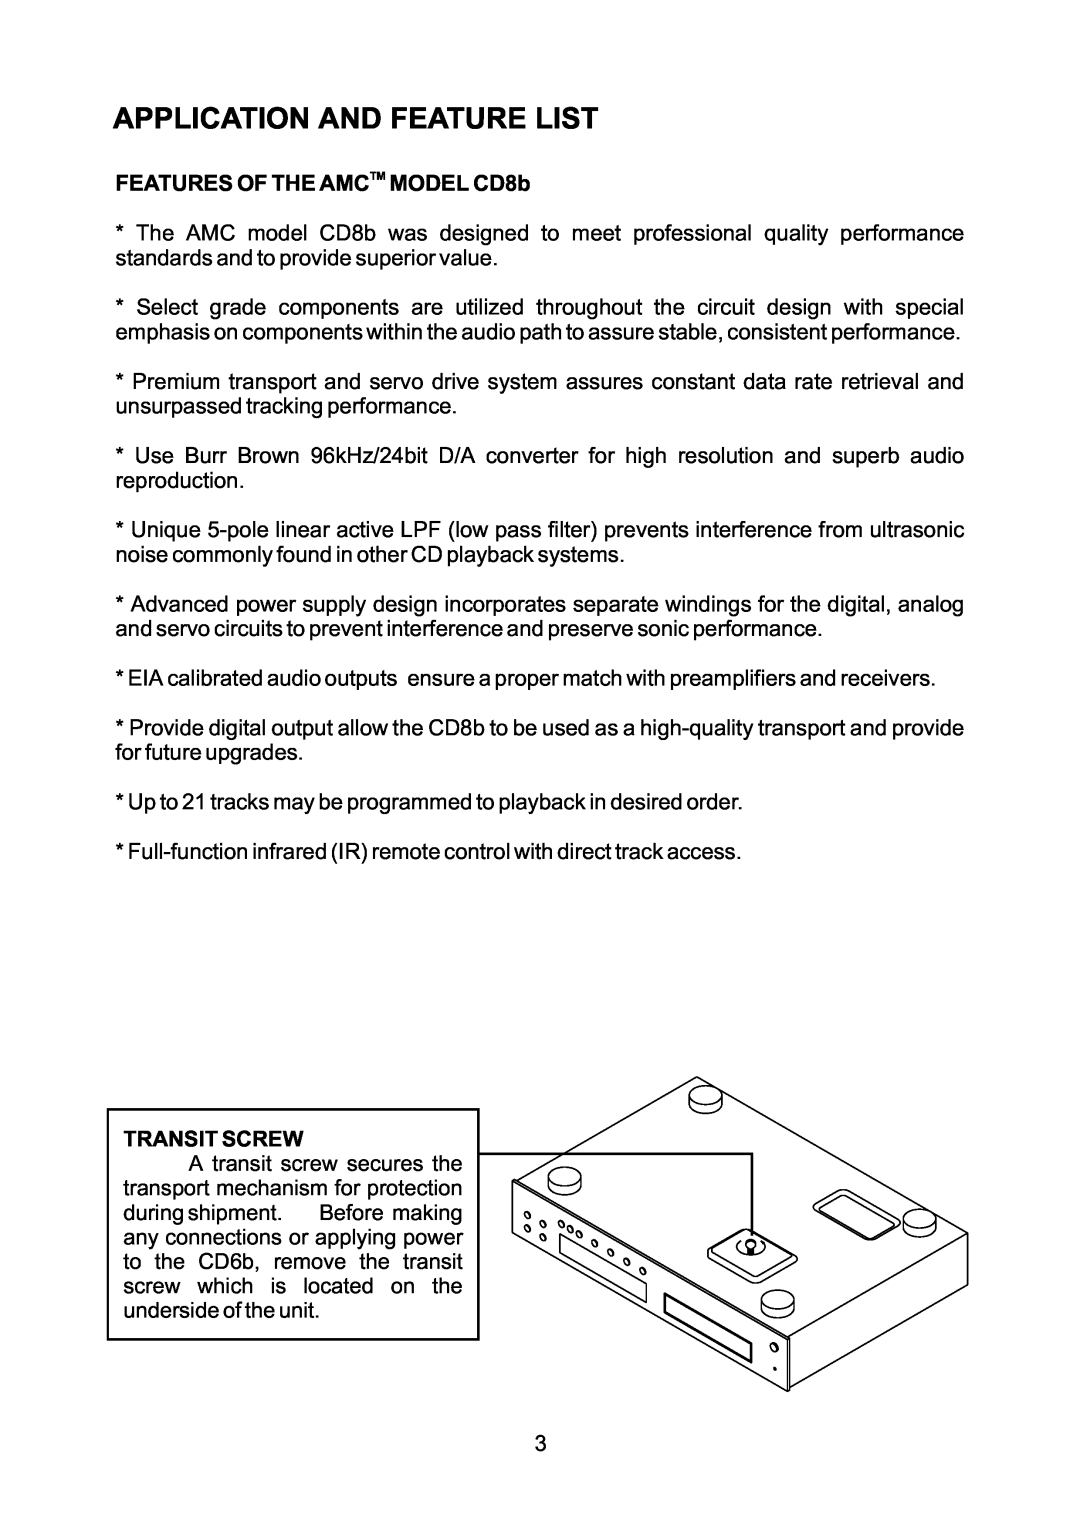 AMC manual FEATURES OF THE AMCTM MODEL CD8b, Transit Screw 